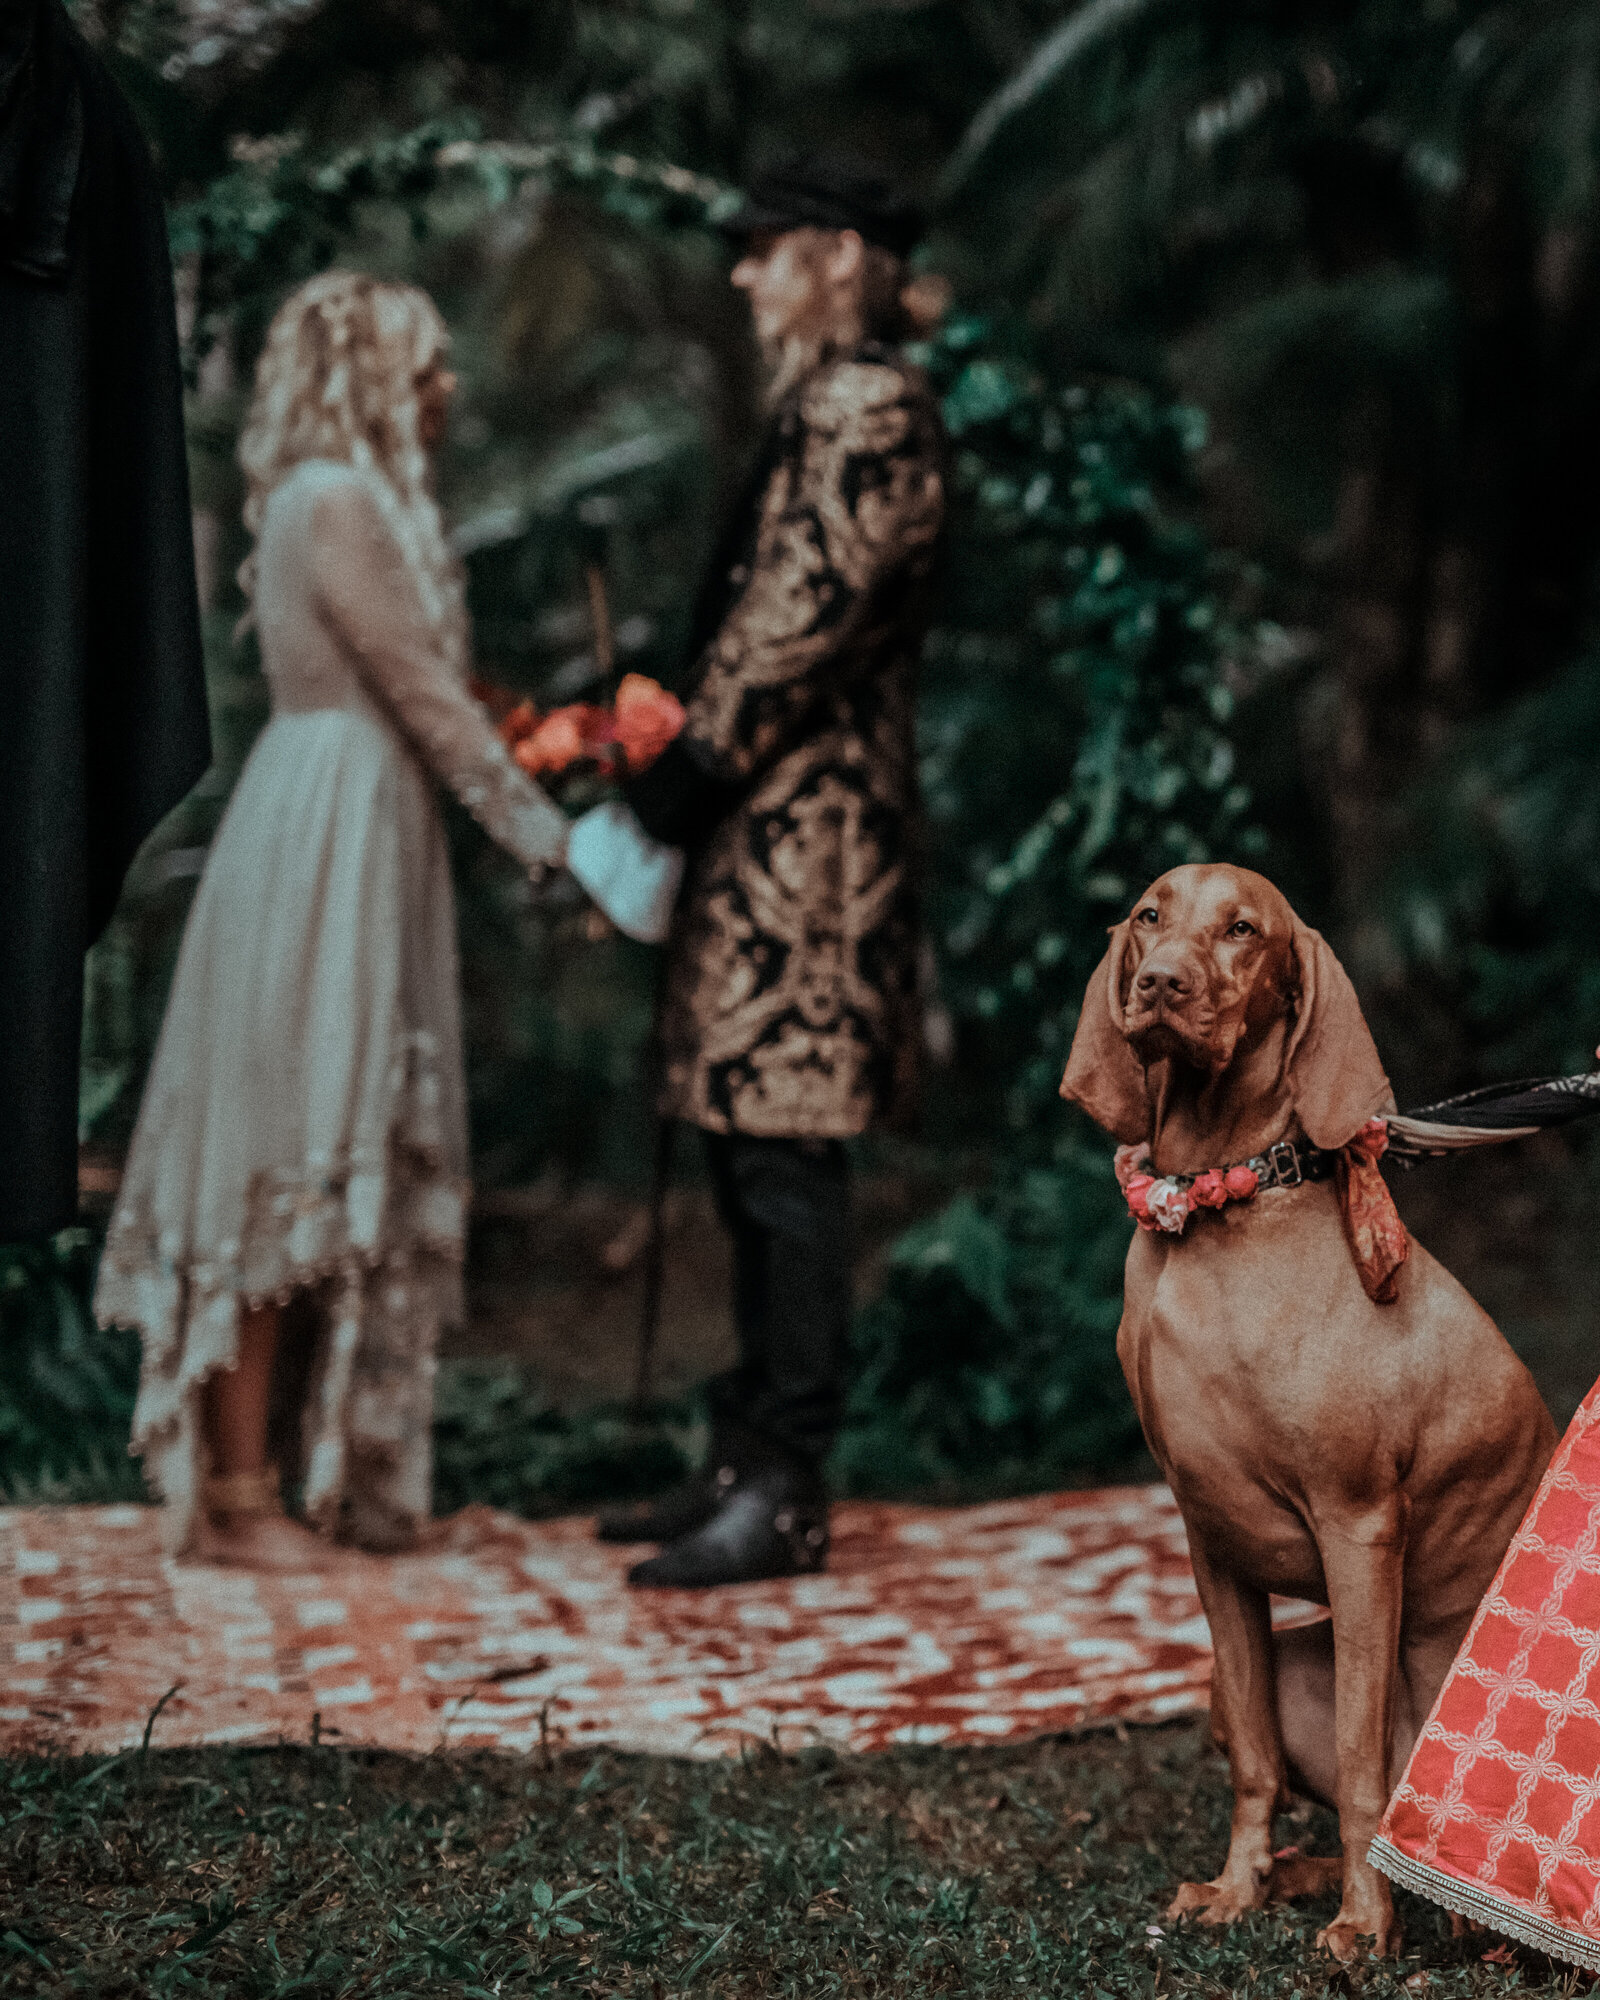 Sharp image of dog at wedding, bride and groom blurred behind